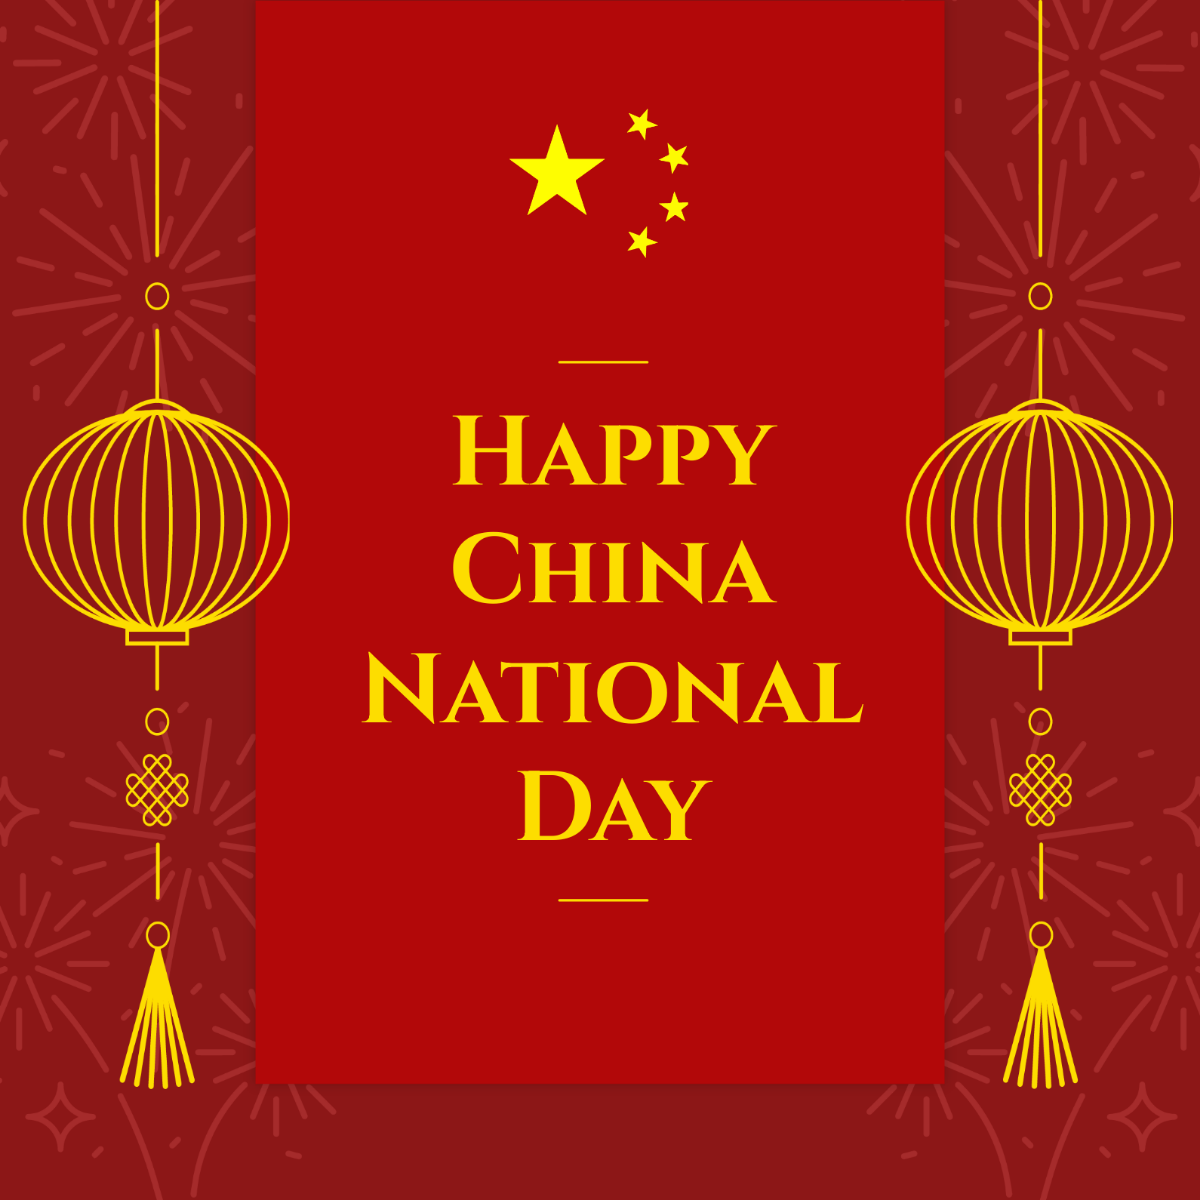 Free China National Day LinkedIn Post Template